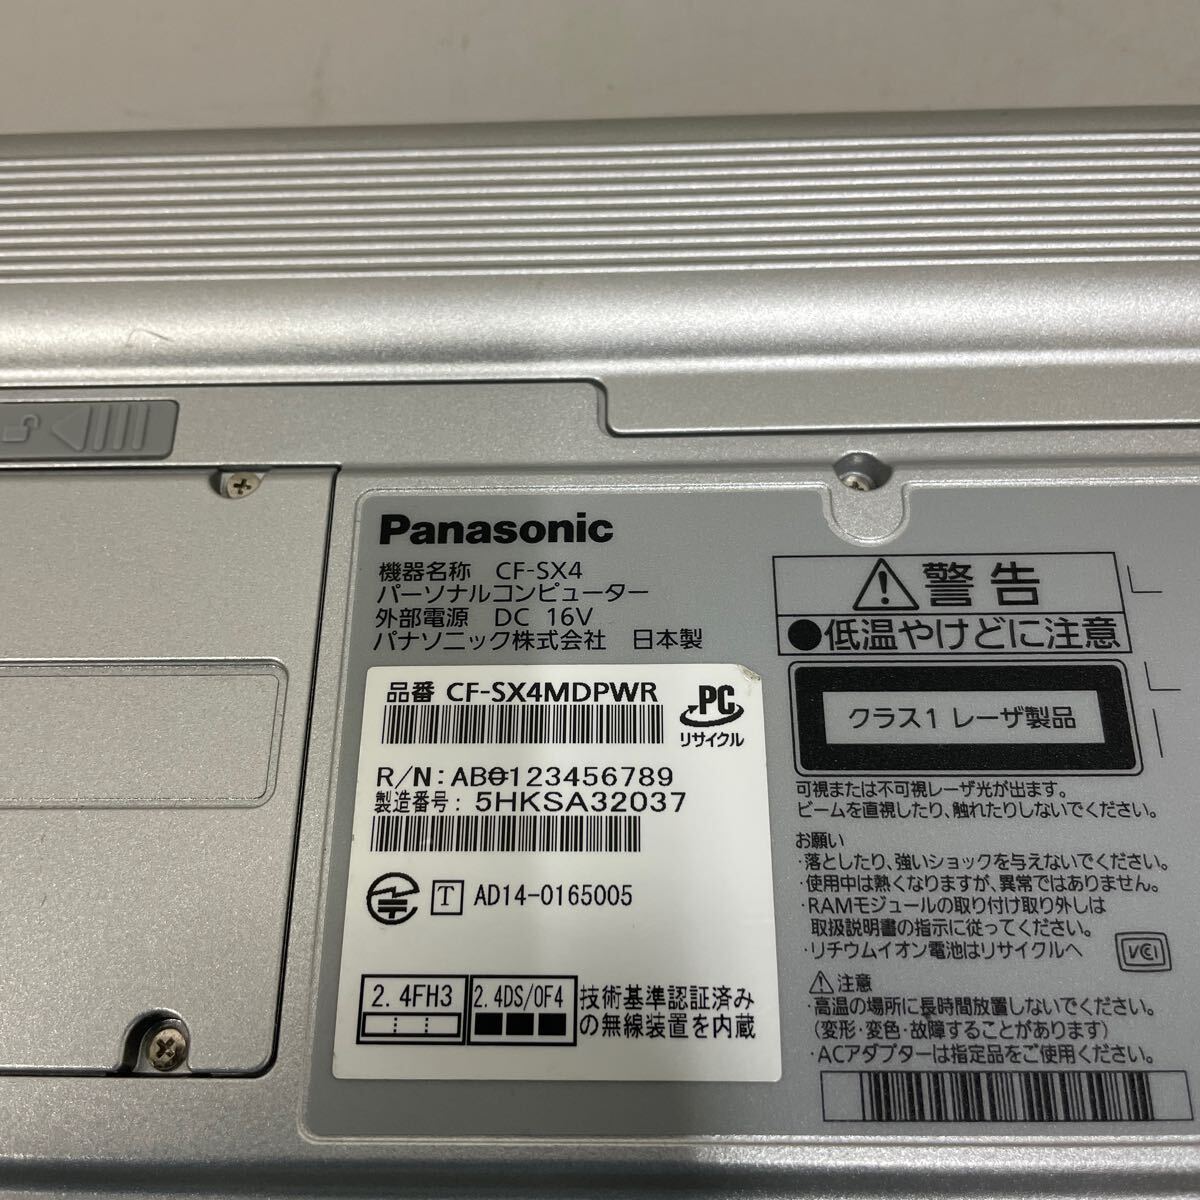 i70 Panasonic Letsnote CF-SX4 Core i5 no. 5 generation memory unknown BIOS lock 